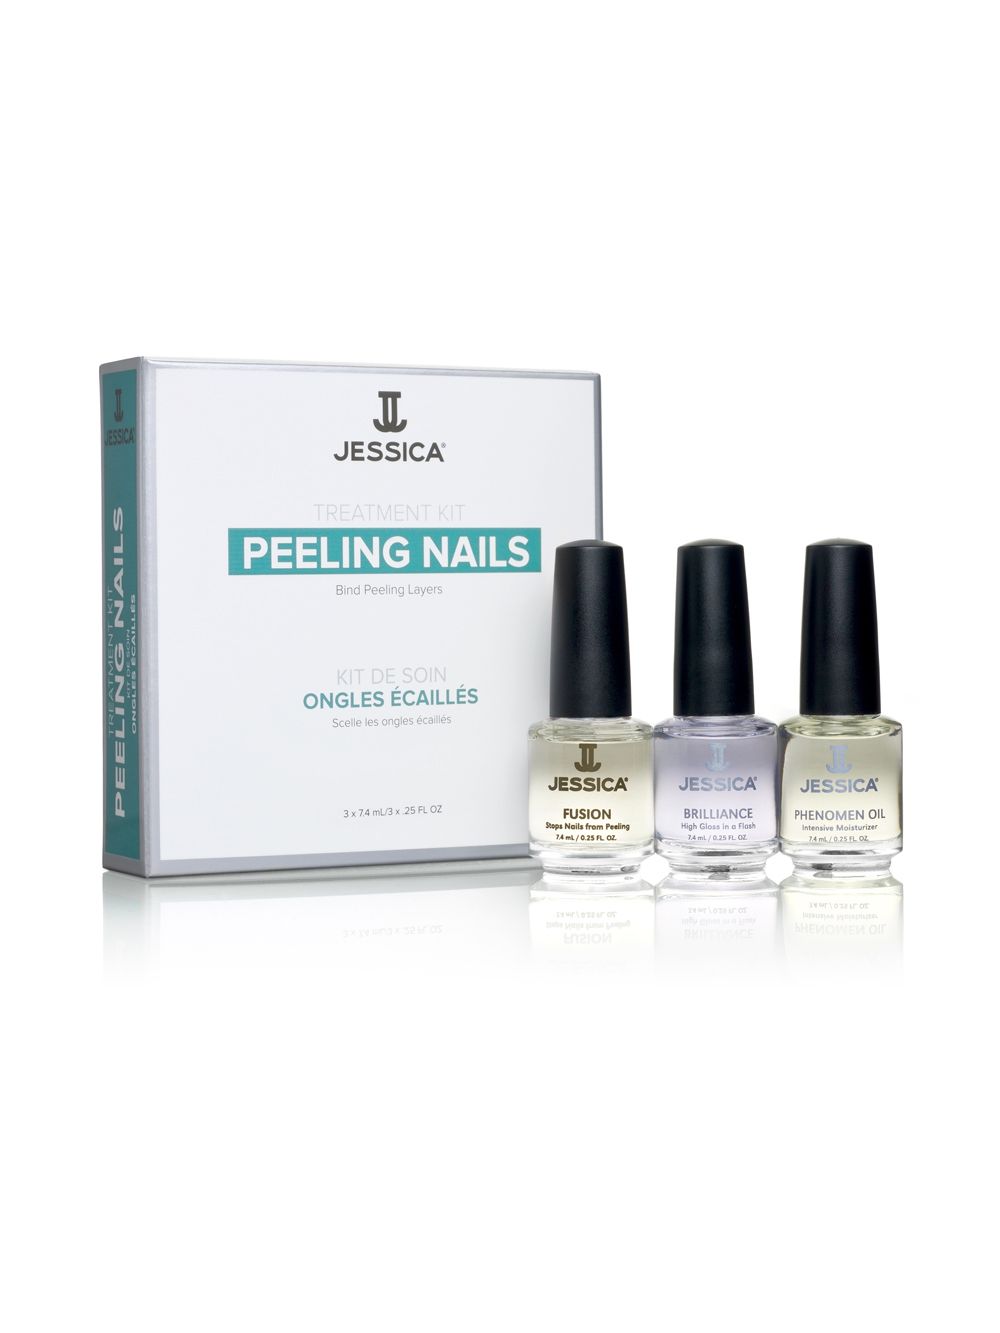 Jessica Peeling Nails Kit